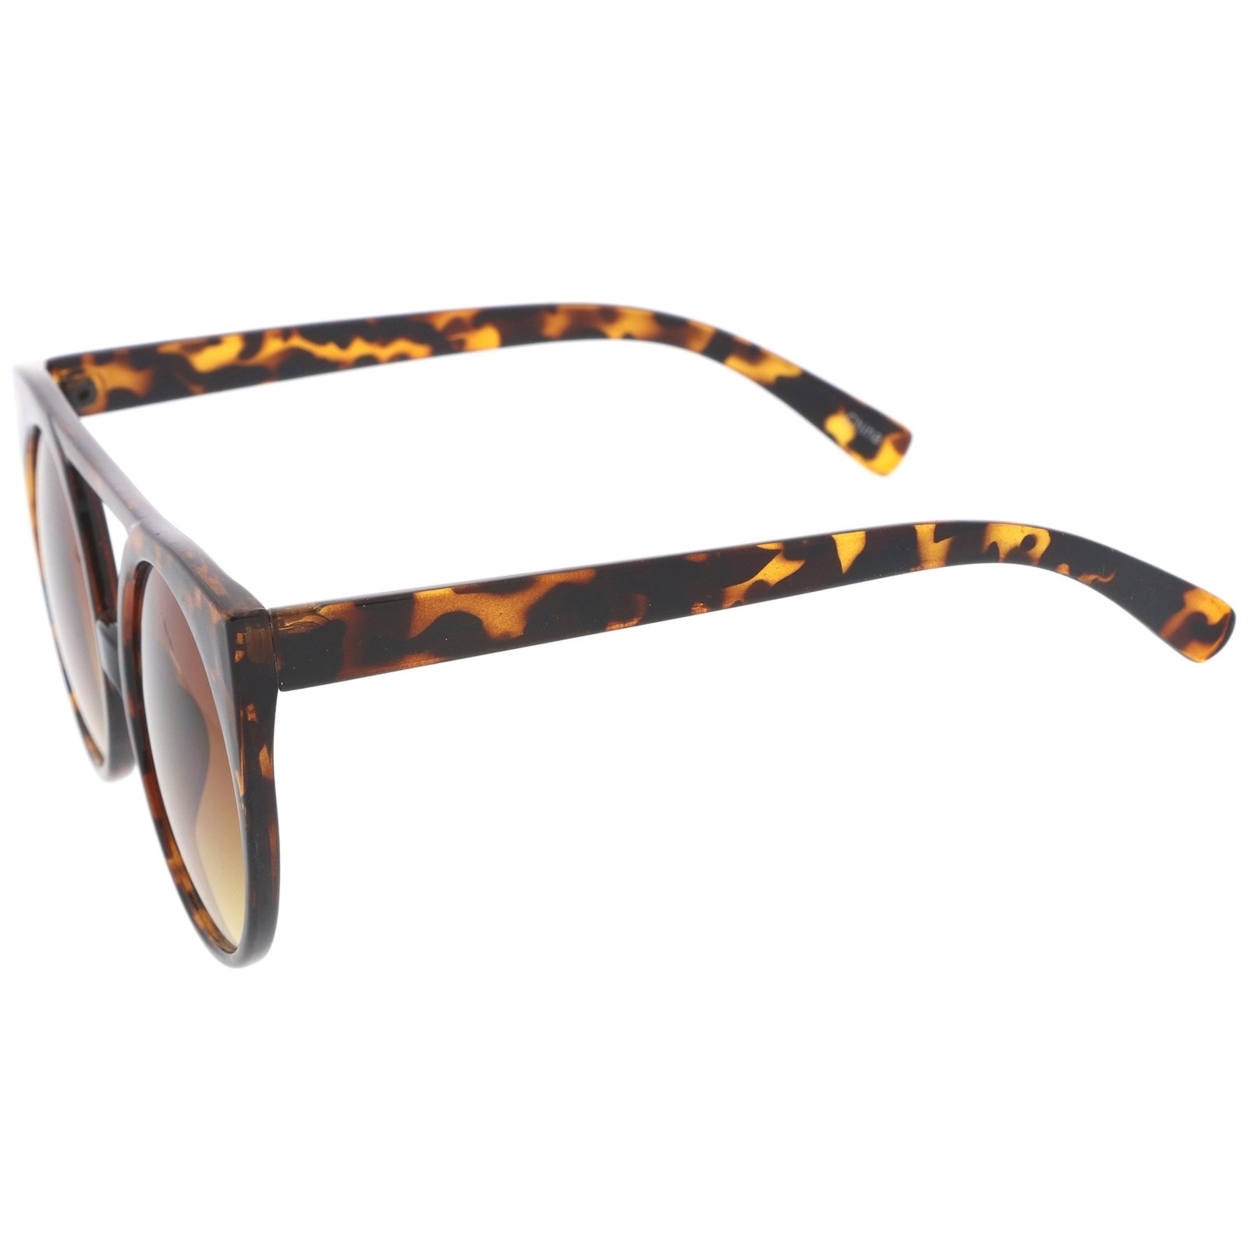 Women's Flat Top Cutout Round Lens Oversize Cat Eye Sunglasses 52mm - Black / Green